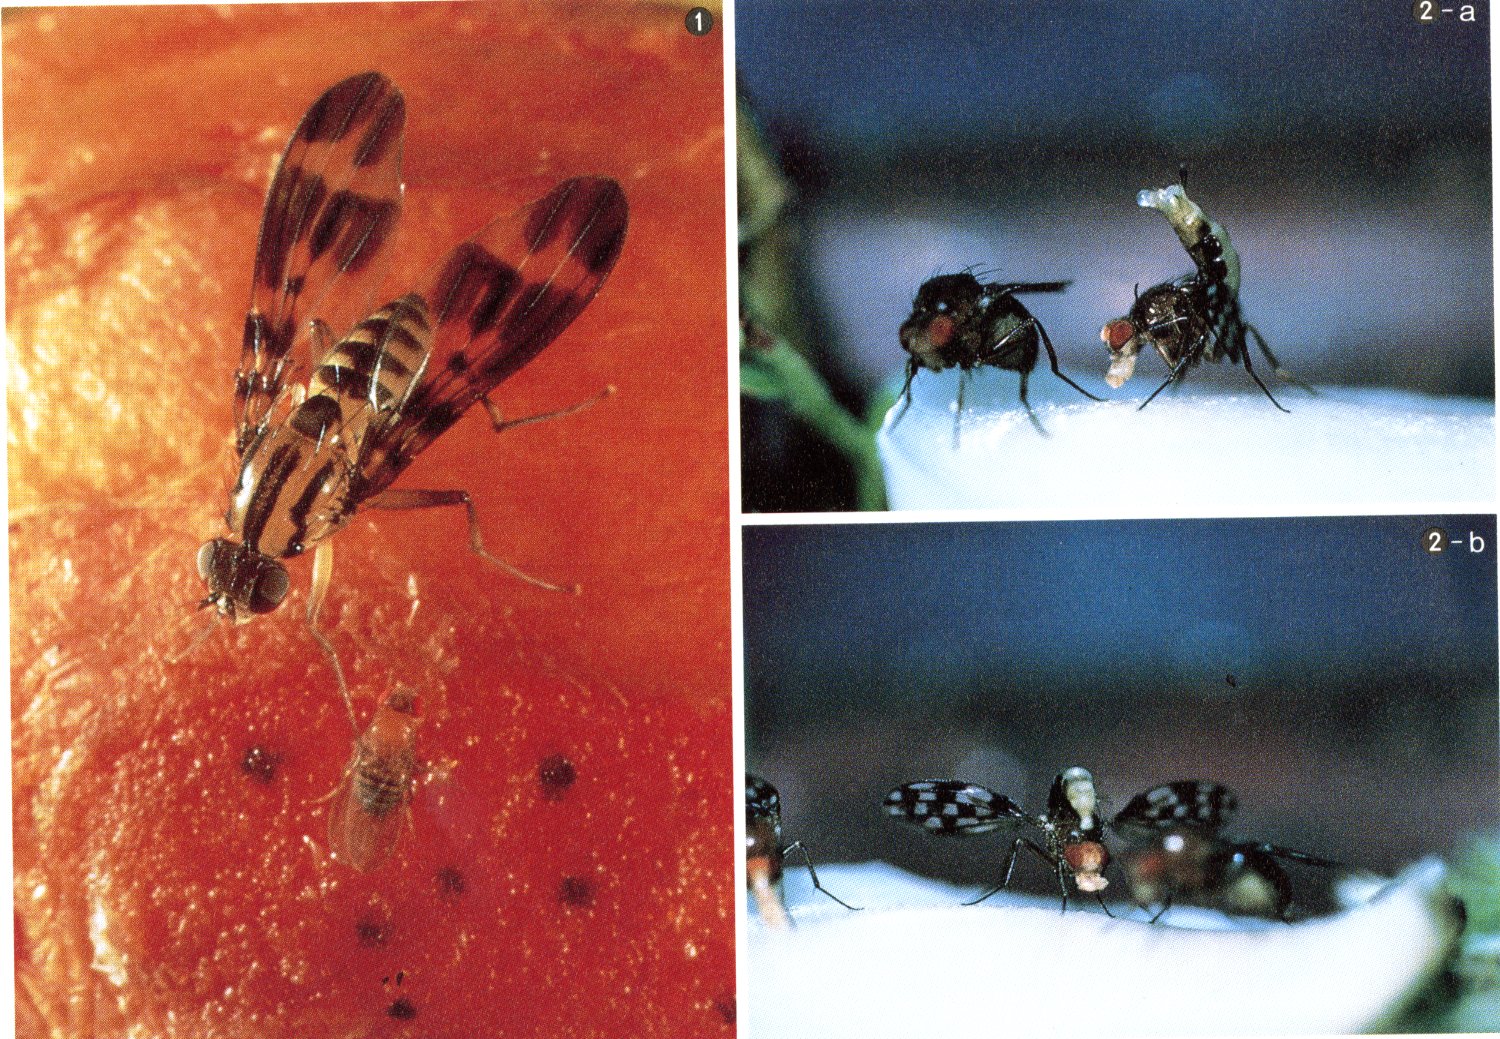 Images of fruit flies